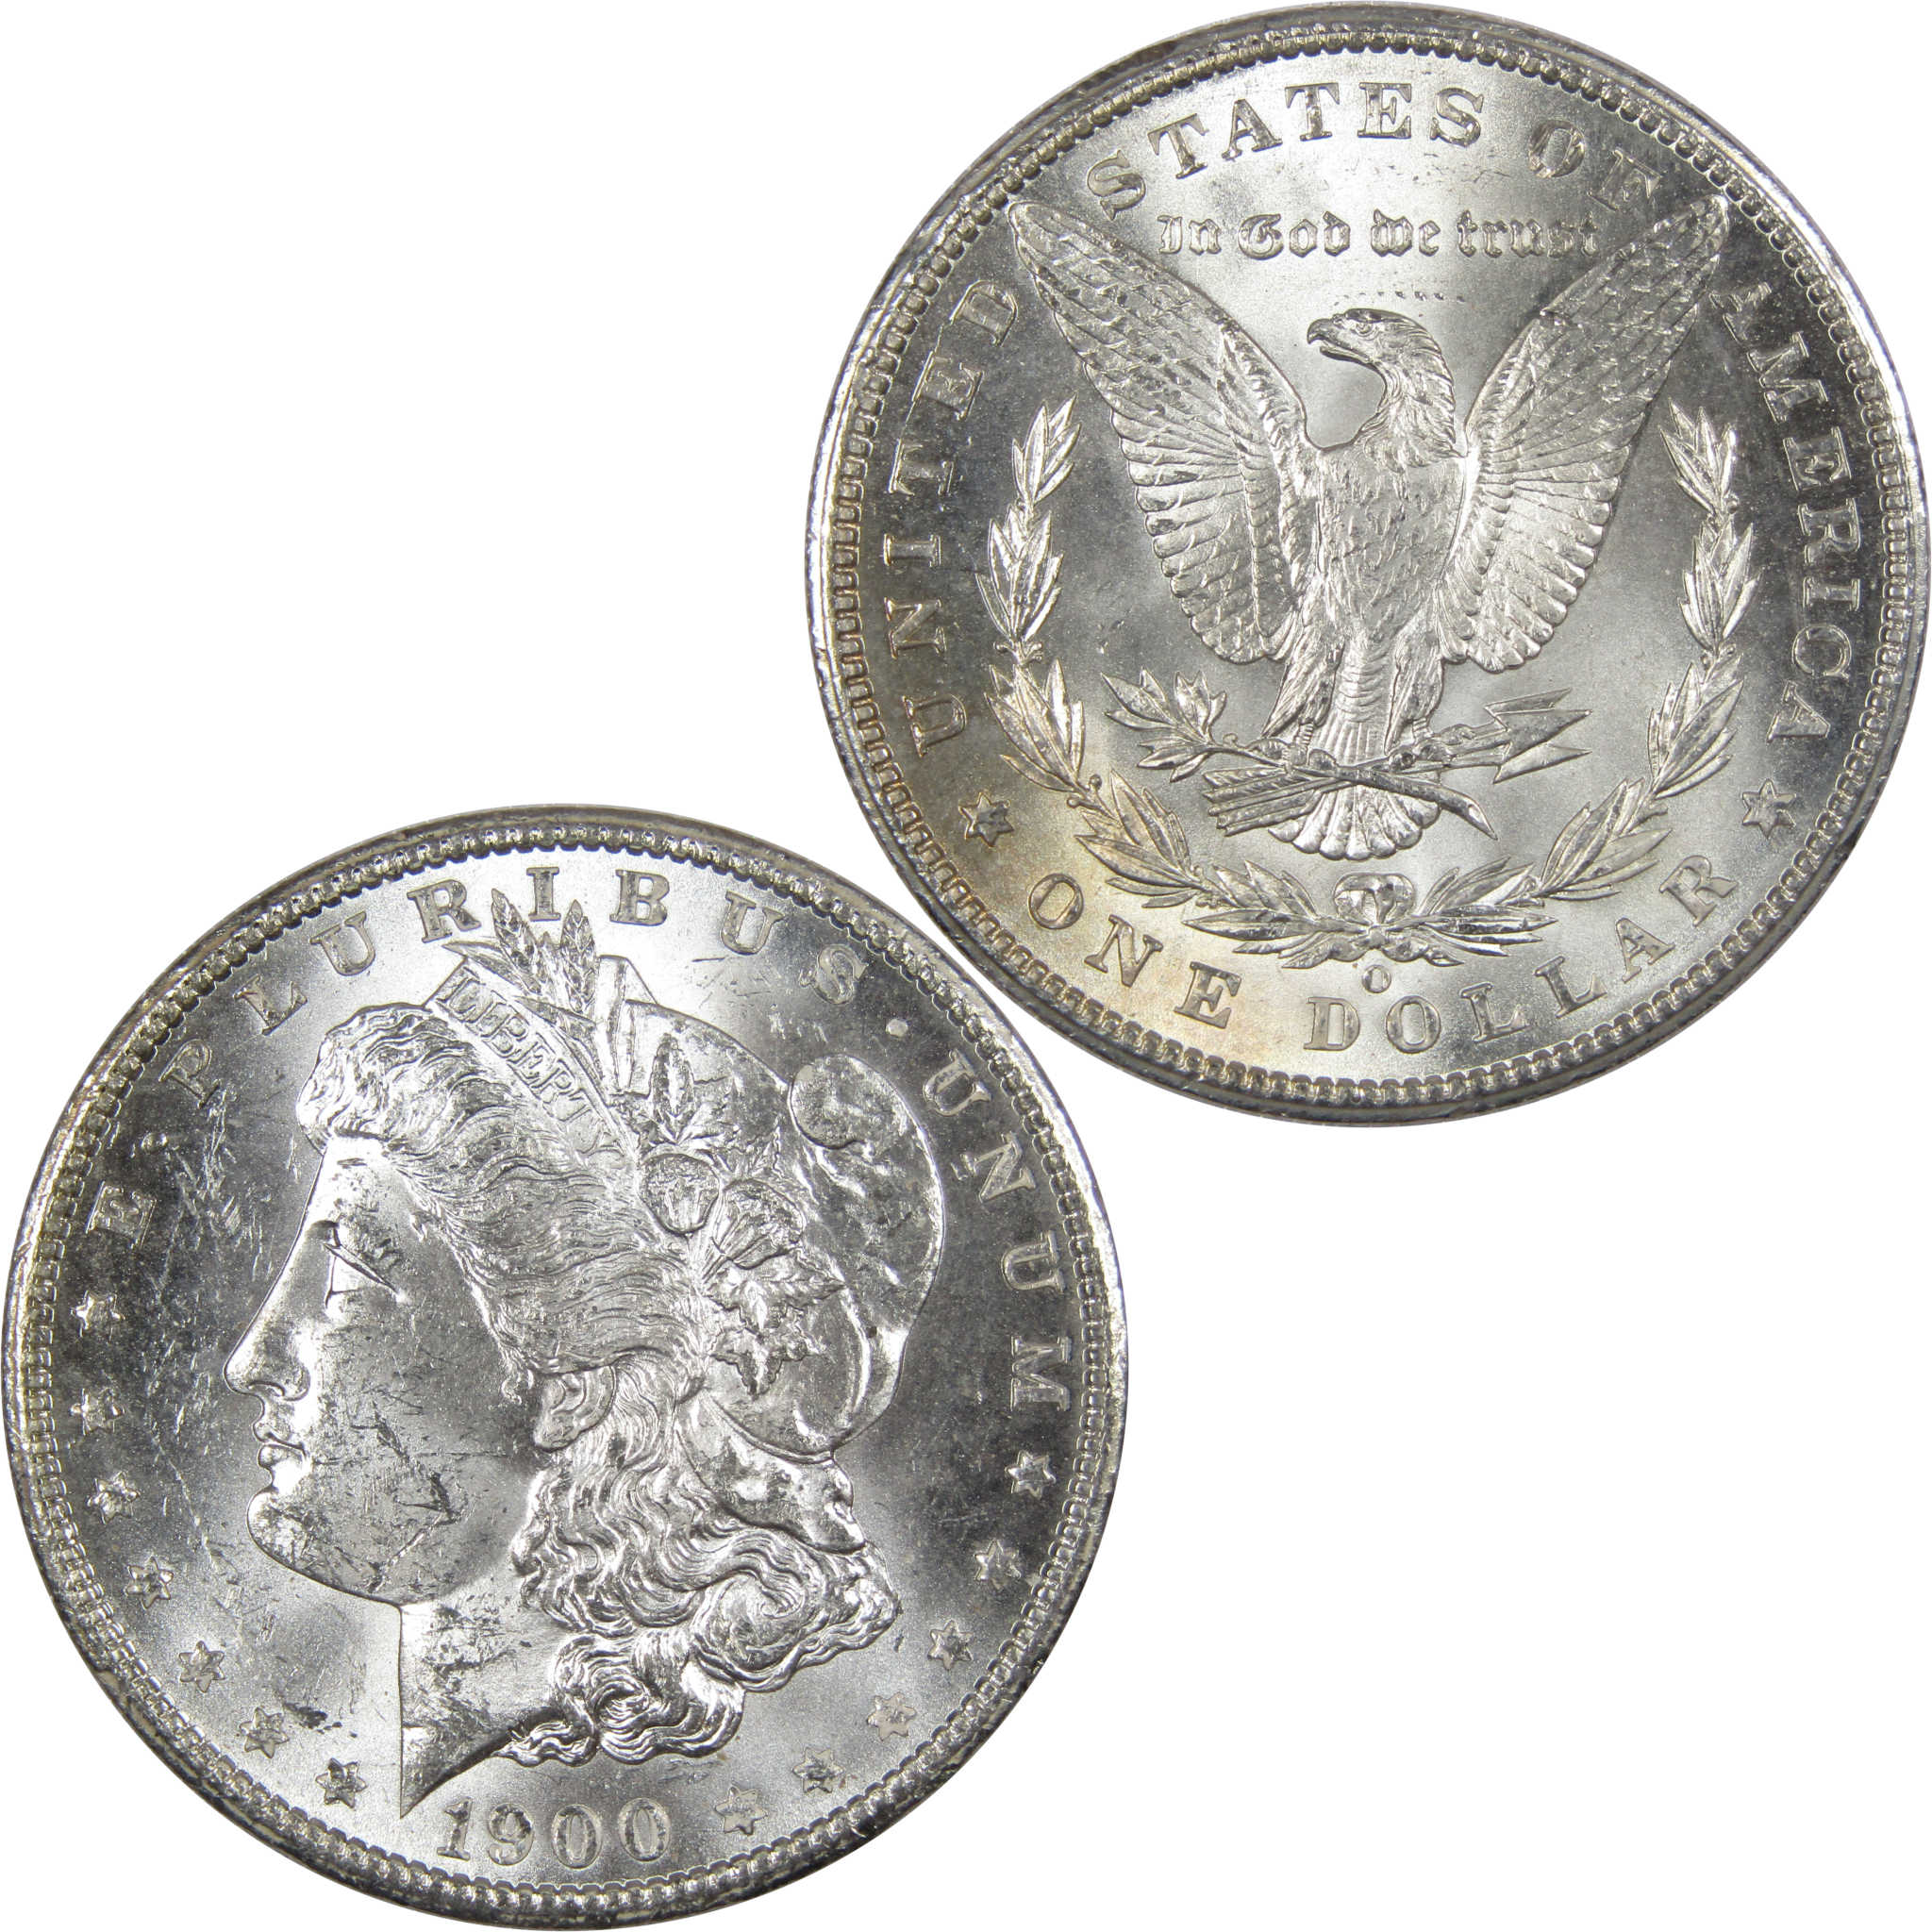 1900 O Morgan Dollar BU Uncirculated Mint State 90% Silver SKU:IPC9765 - Morgan coin - Morgan silver dollar - Morgan silver dollar for sale - Profile Coins &amp; Collectibles